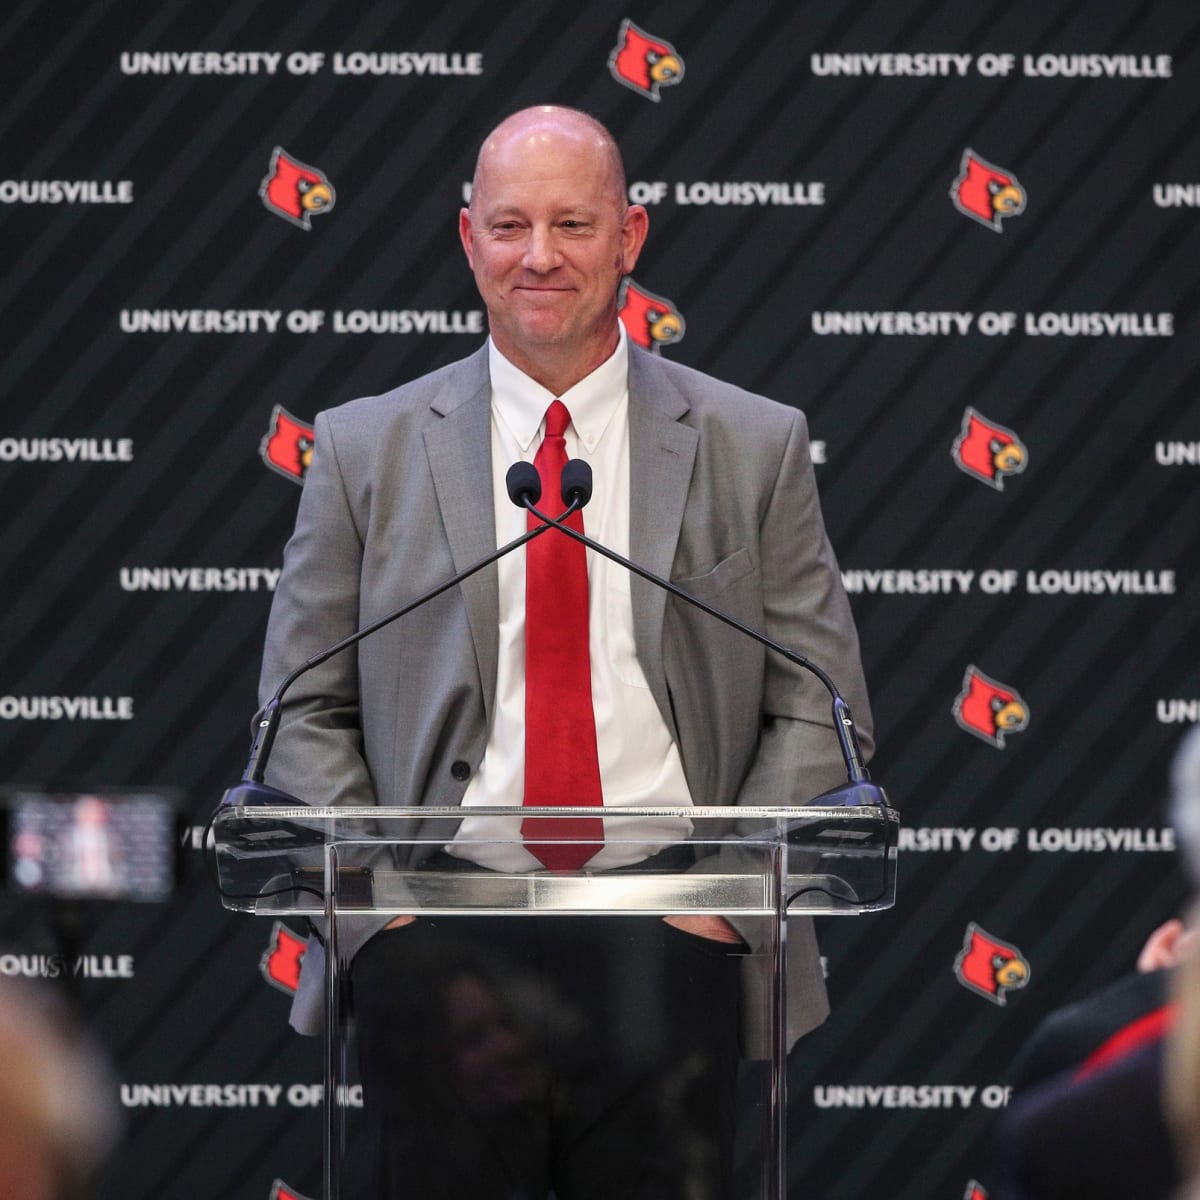 University of Louisville Presentation to The Louisville Cardinal